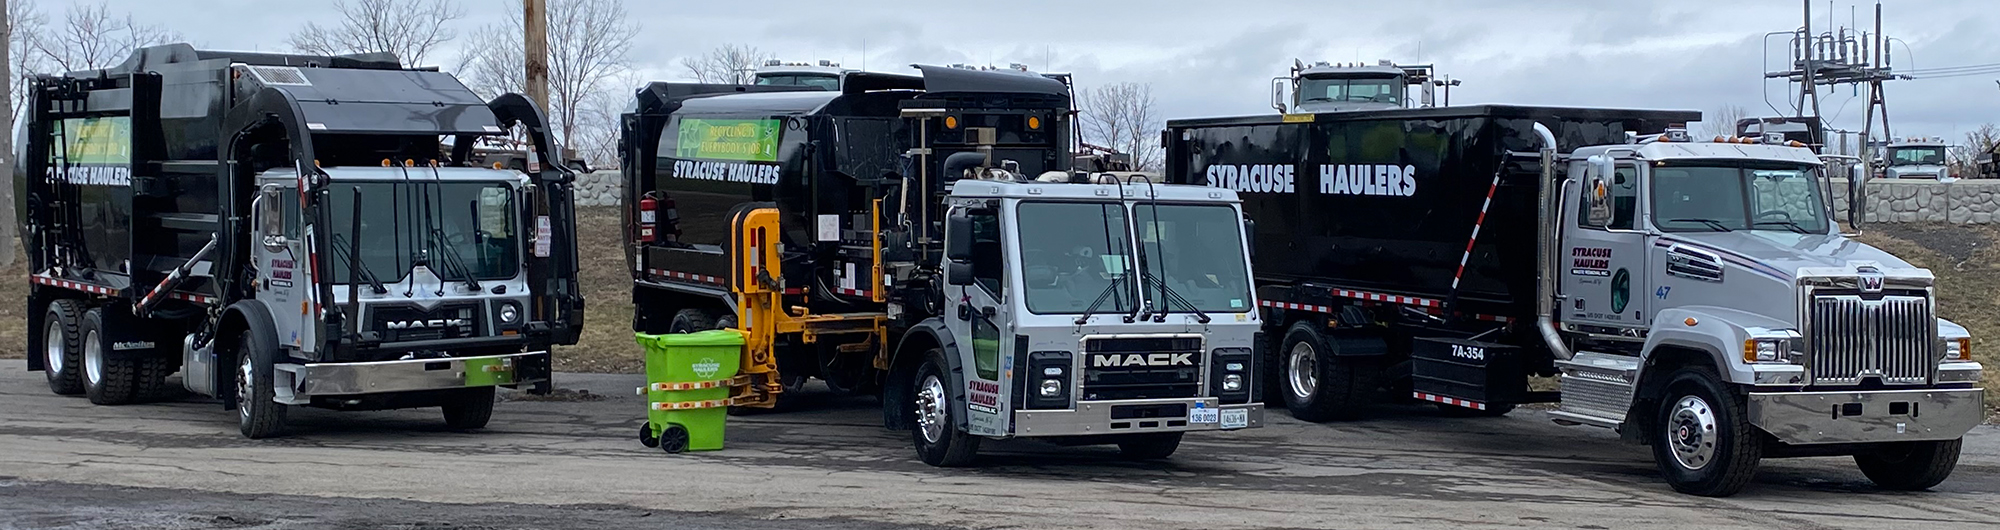 Syracuse Haulers Waste Removal Hero Unit Image